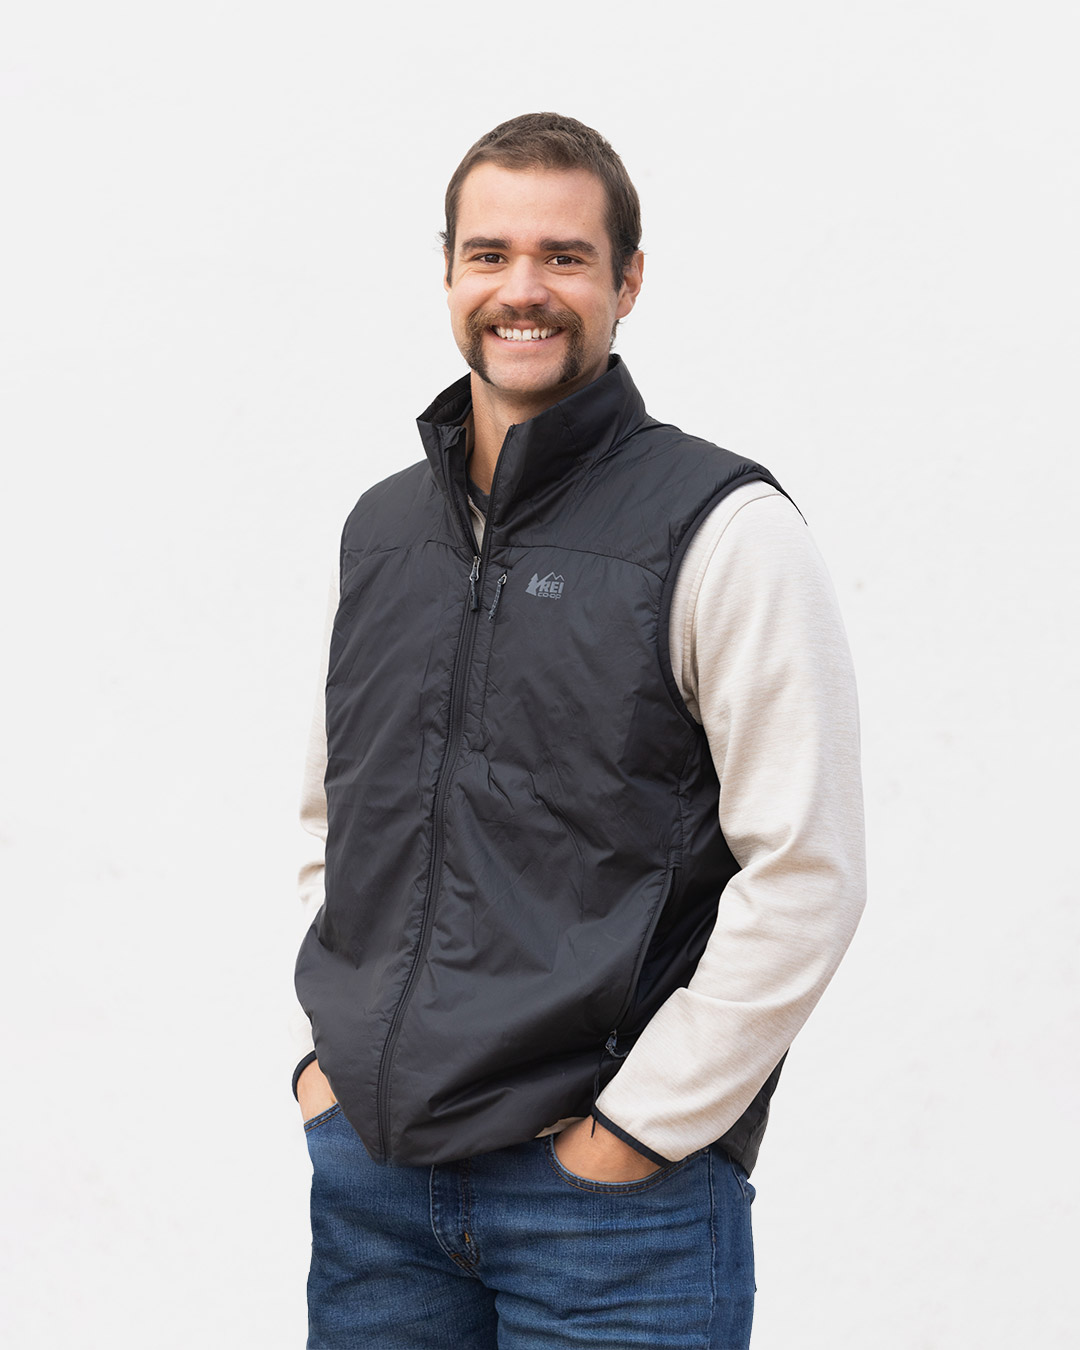 Joel Sawyer of Freestone Design-Build smiling for his team photo taken on a neutral white background